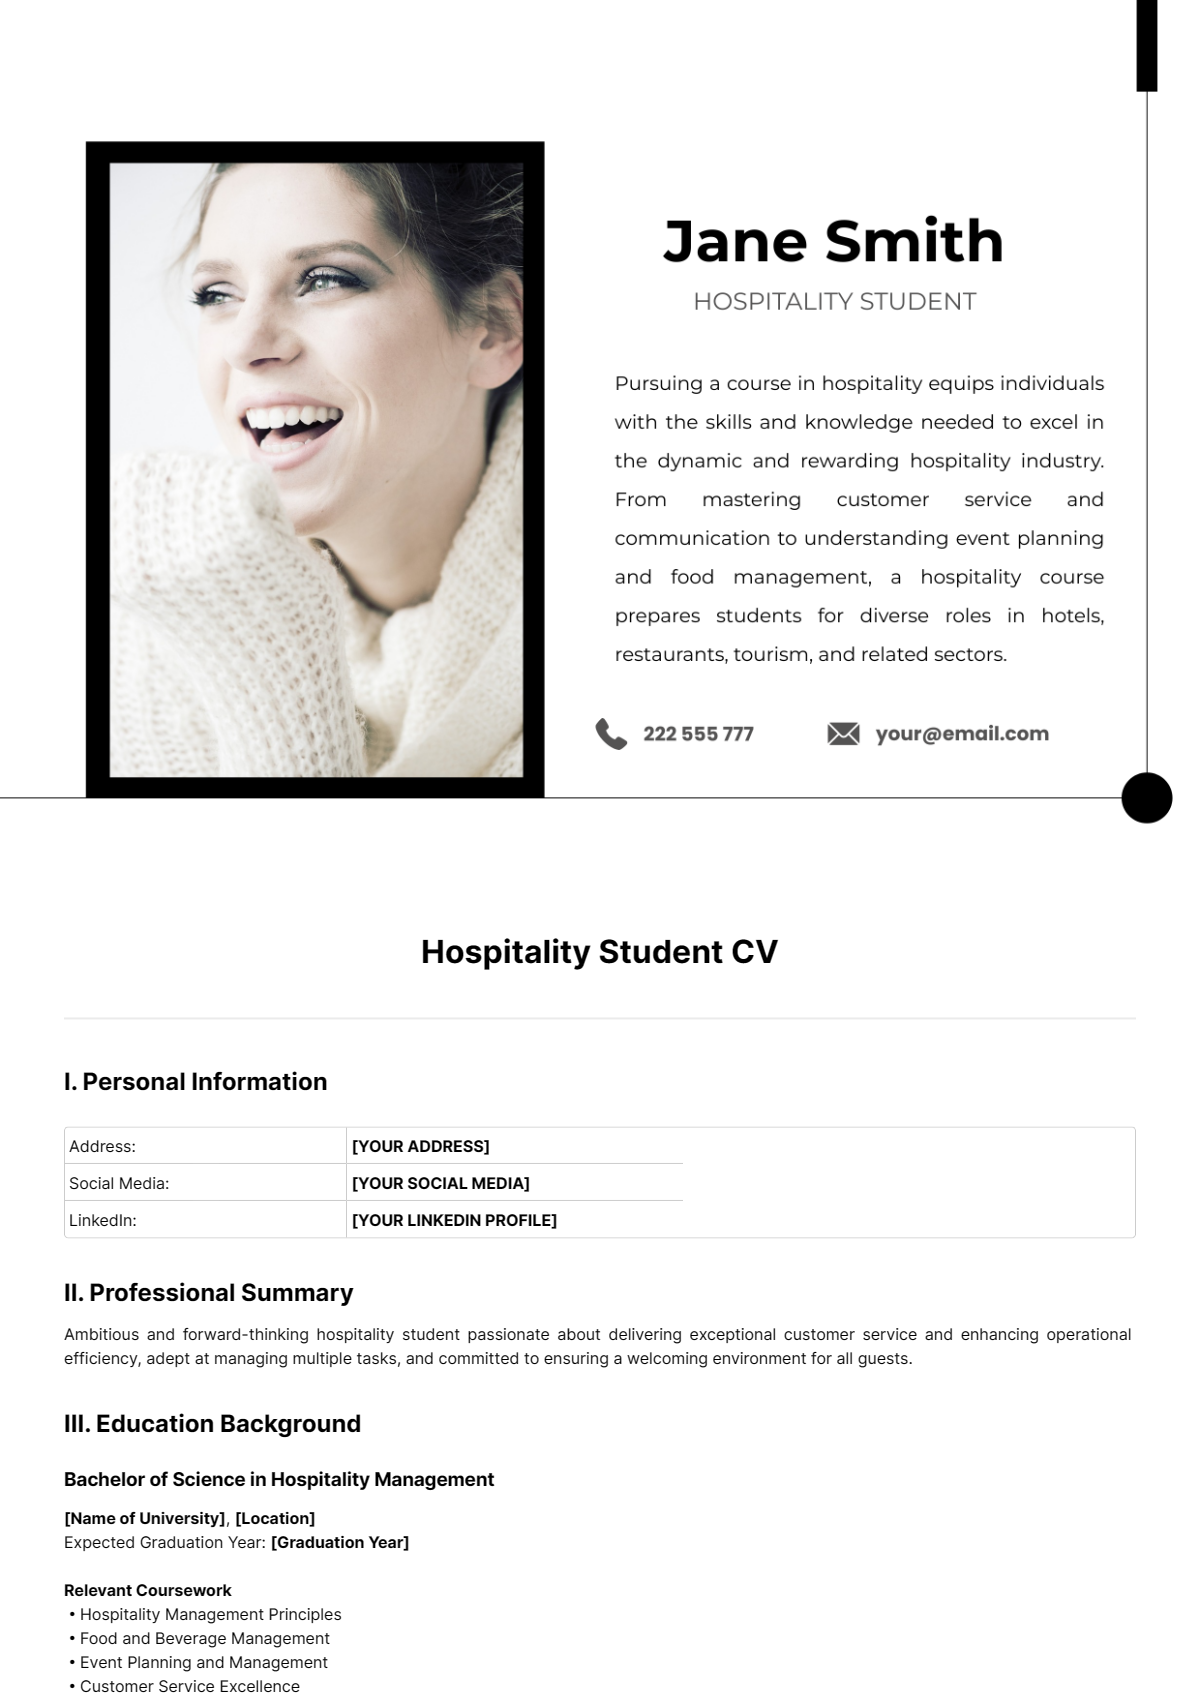 Free Hospitality Student CV Template